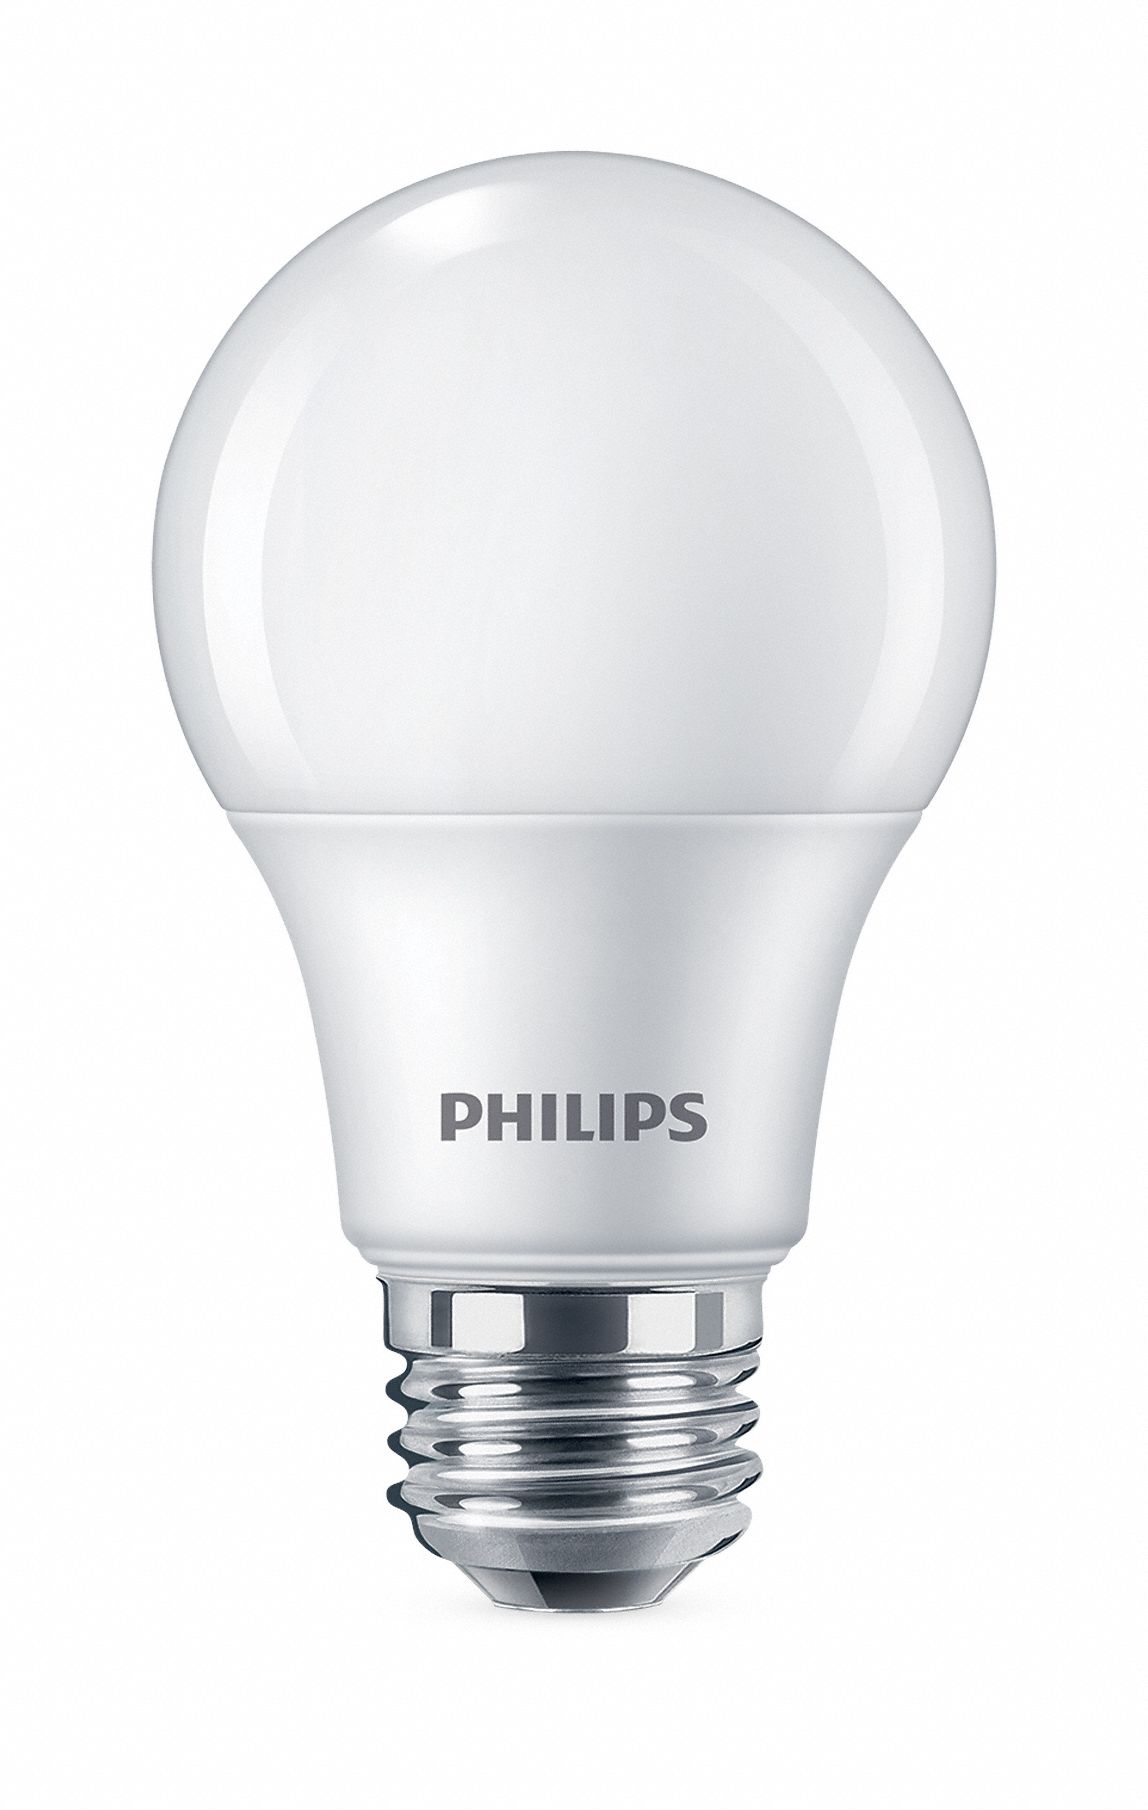 Huichelaar nemen gevoeligheid PHILIPS, A19, Medium Screw (E26), LED Lamp Replacement -  784ND5|8.5A19/LED/930/FR/P/ND 4/1FB - Grainger